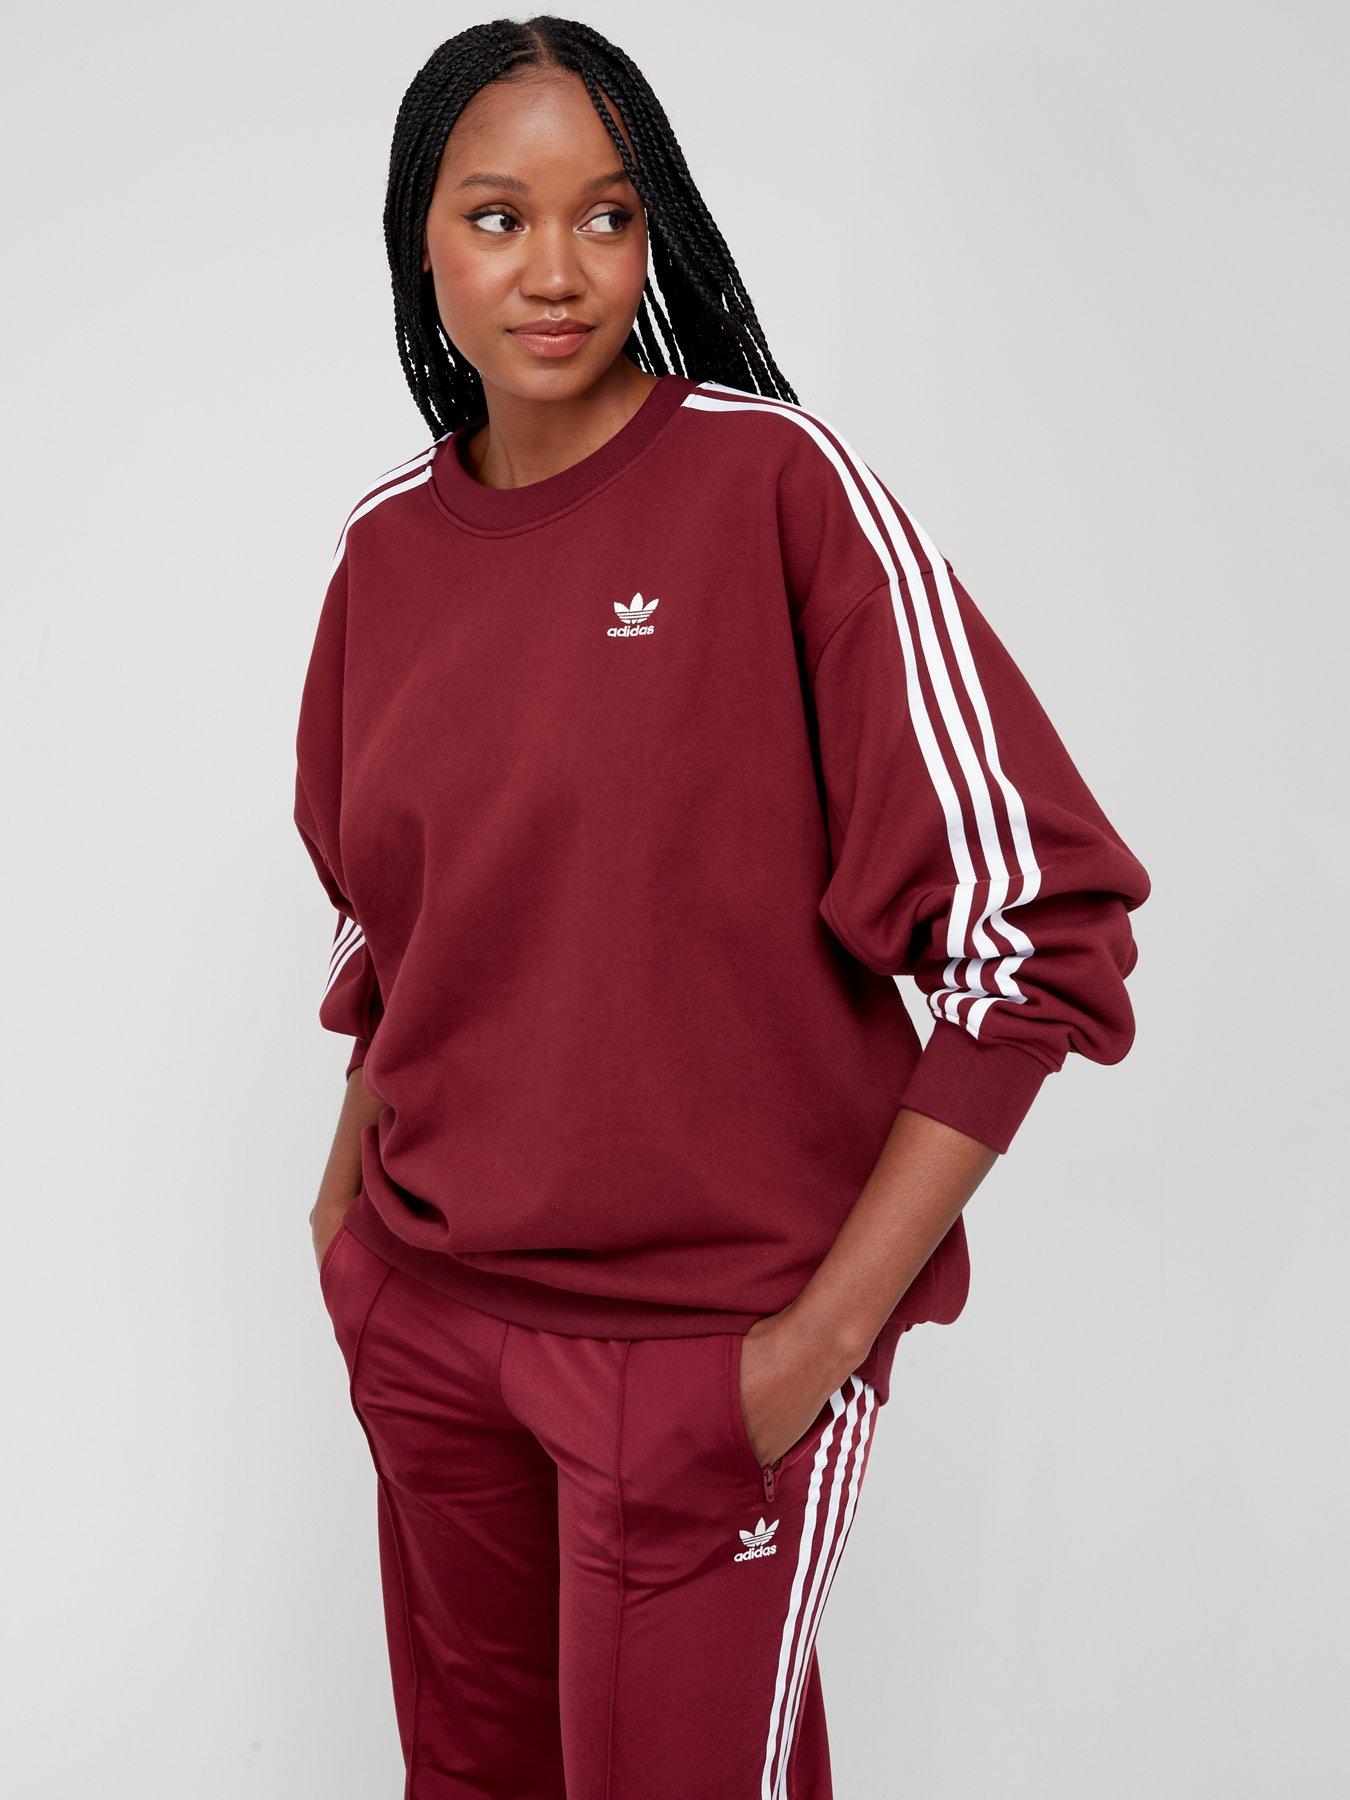 Adidas | & | Womens sports clothing | Sports leisure | Very Ireland